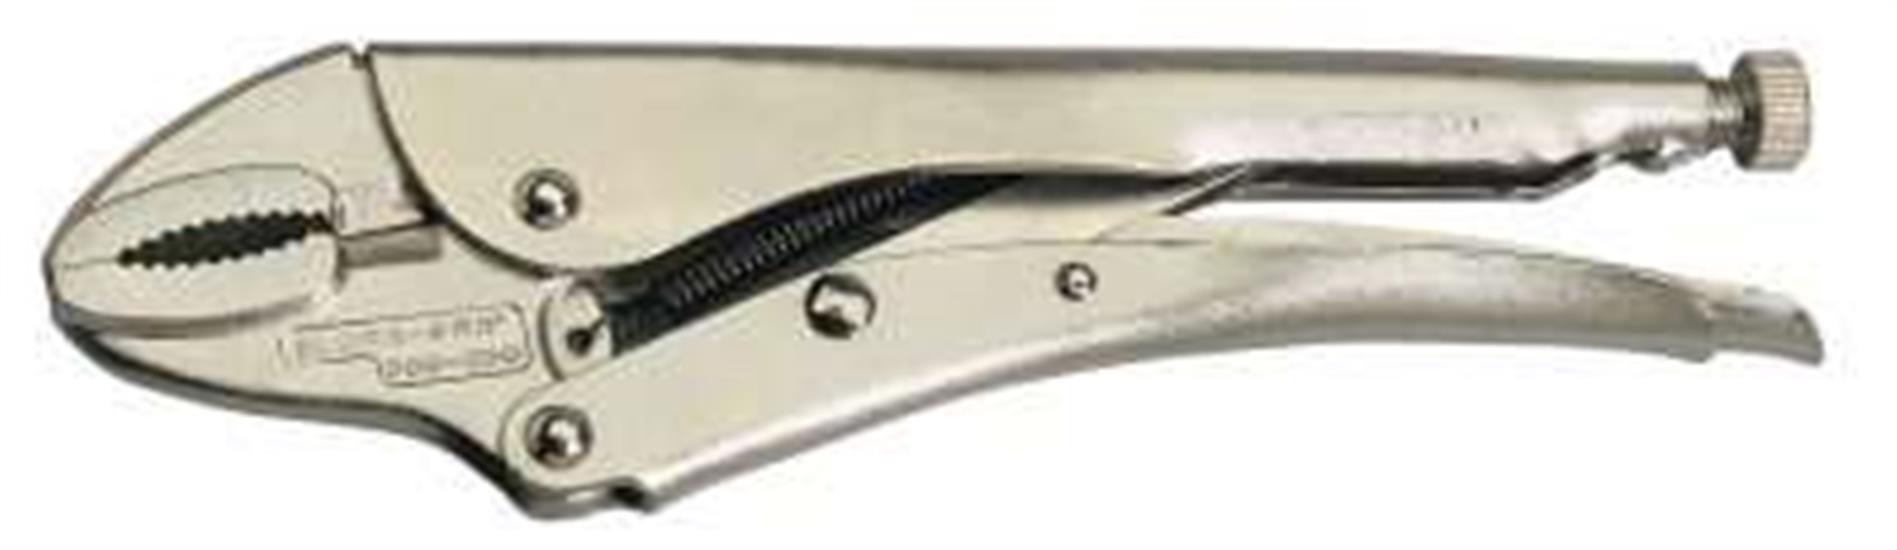 Draper 23783 𨔀) - 250mm Draper Value Self Grip Pliers